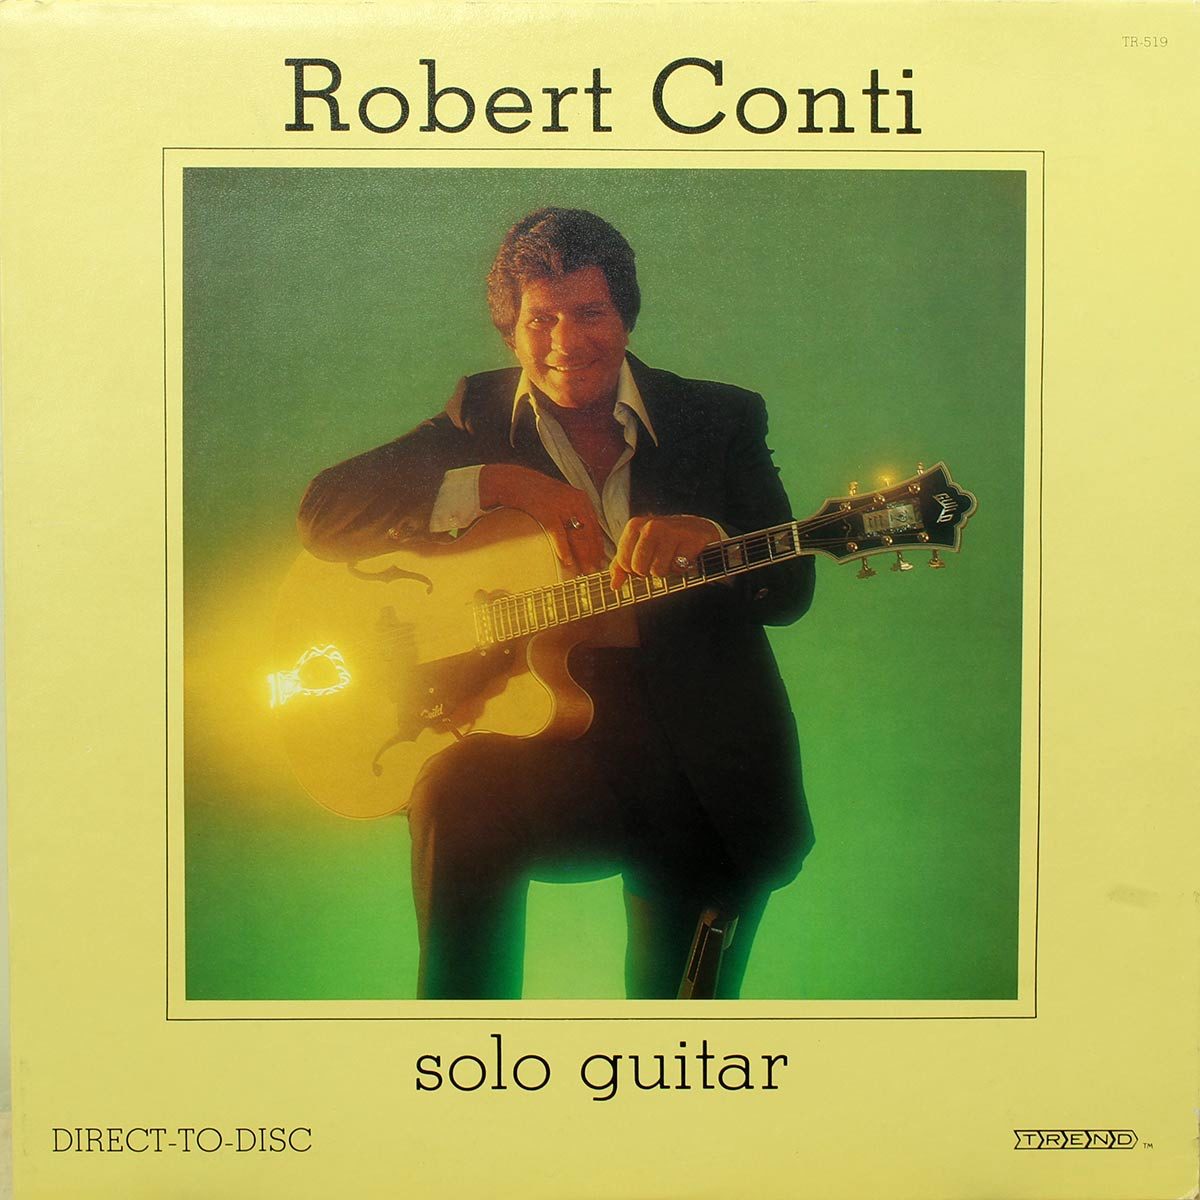 1979 - Robert Conti Direct-To-Disc Solo Guitar LP